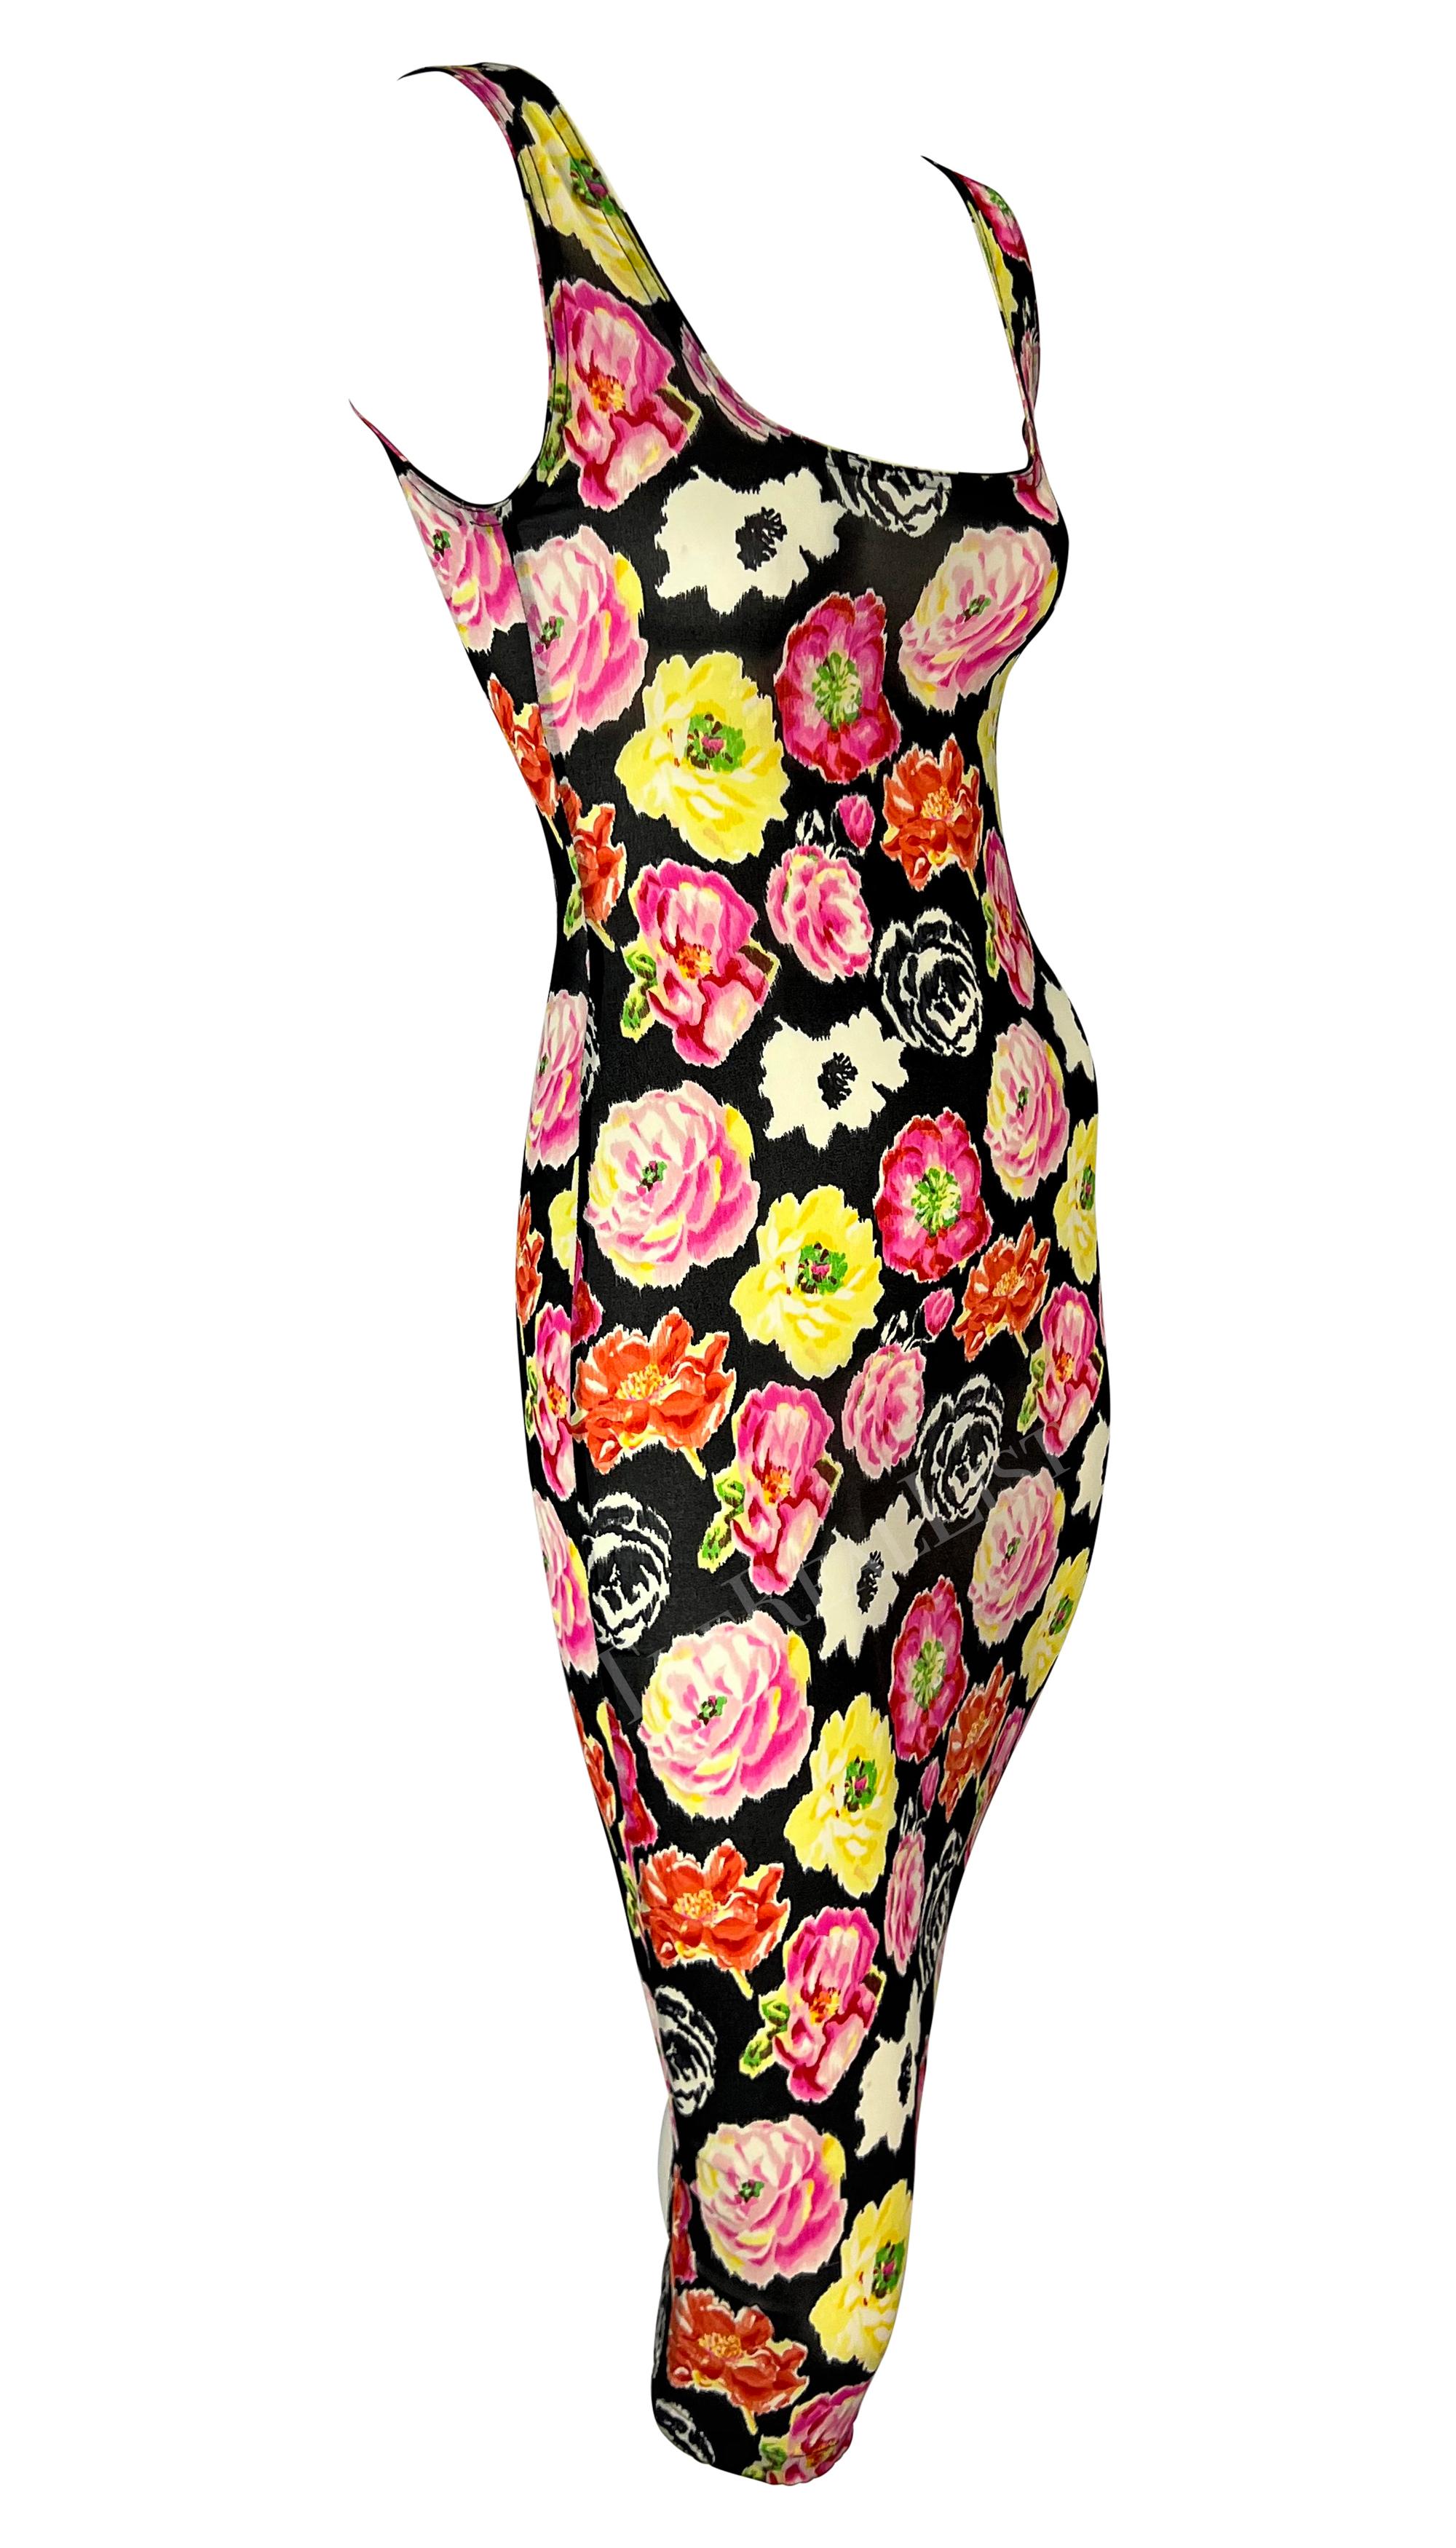 S/S 1995 Gianni Versace Runway Floral Print Semi-Sheer Slip Wiggle Dress For Sale 5